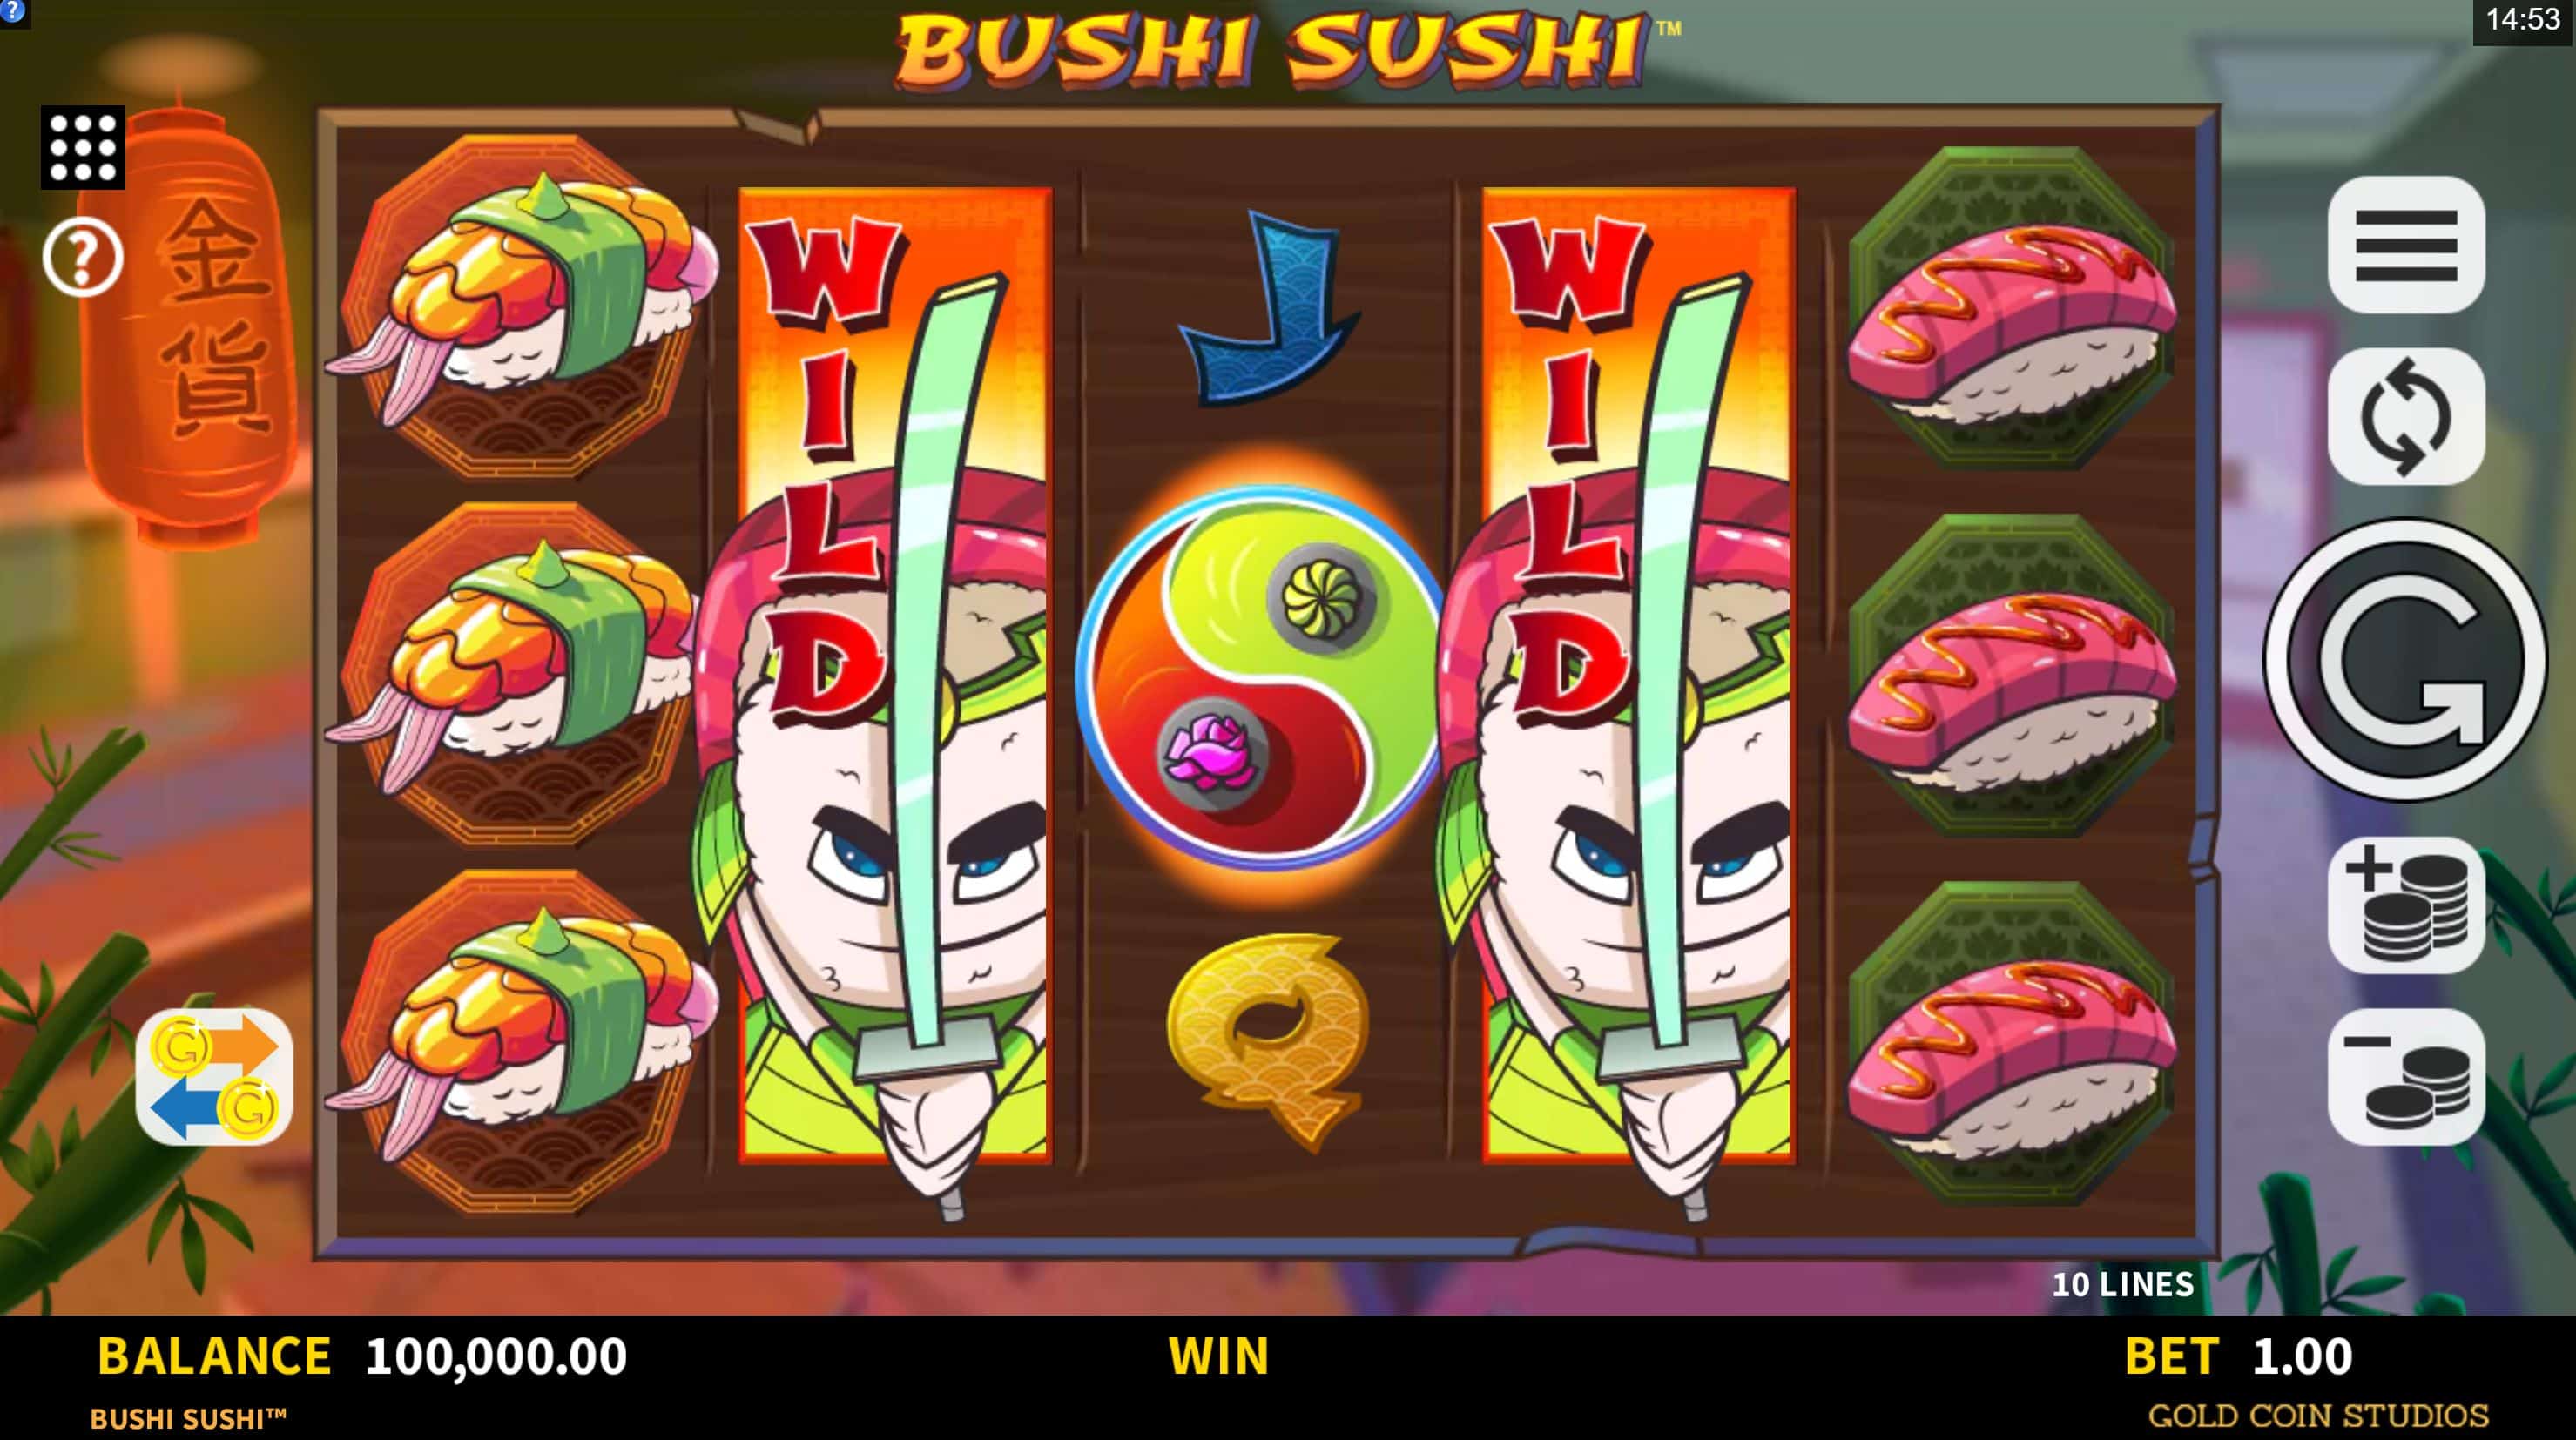 Bushi Sushi Slot Game Free Play at Casino Ireland 01